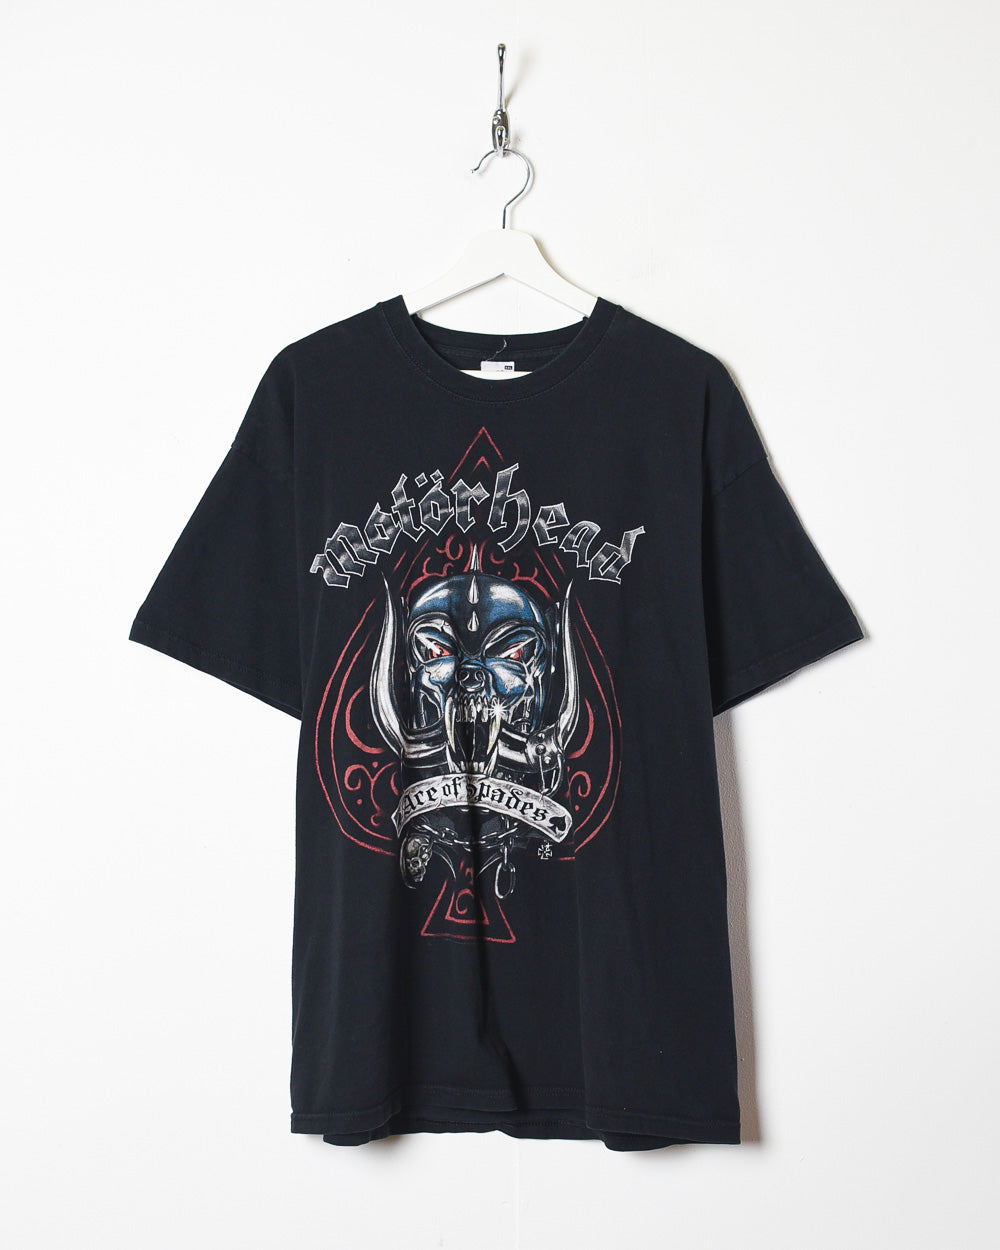 Black Moterhead Ace of Spades Graphic T-Shirt - XX-Large